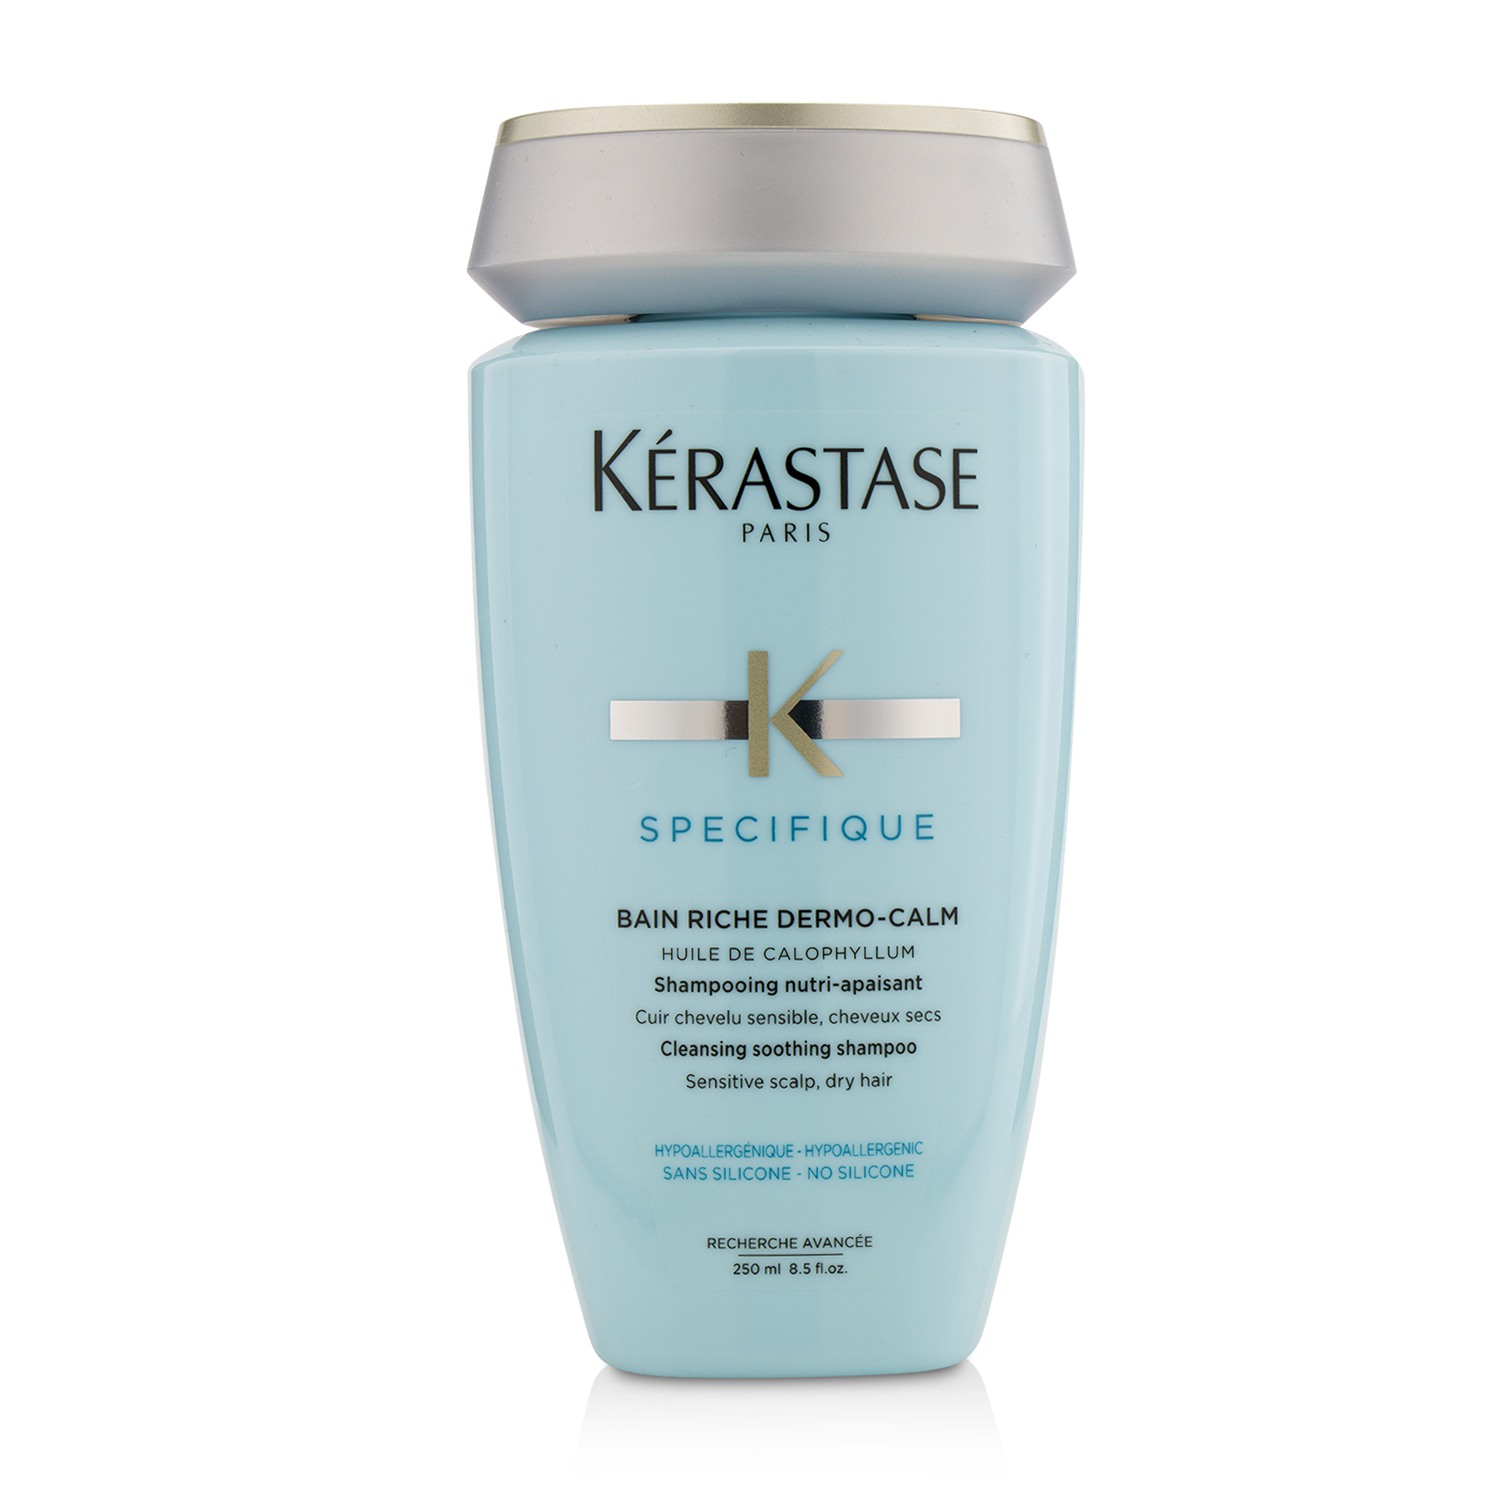 Specifique Bain Riche Dermo-Calm Cleansing Soothing Shampoo (Sensitive Scalp Dry Hair) Kerastase Image